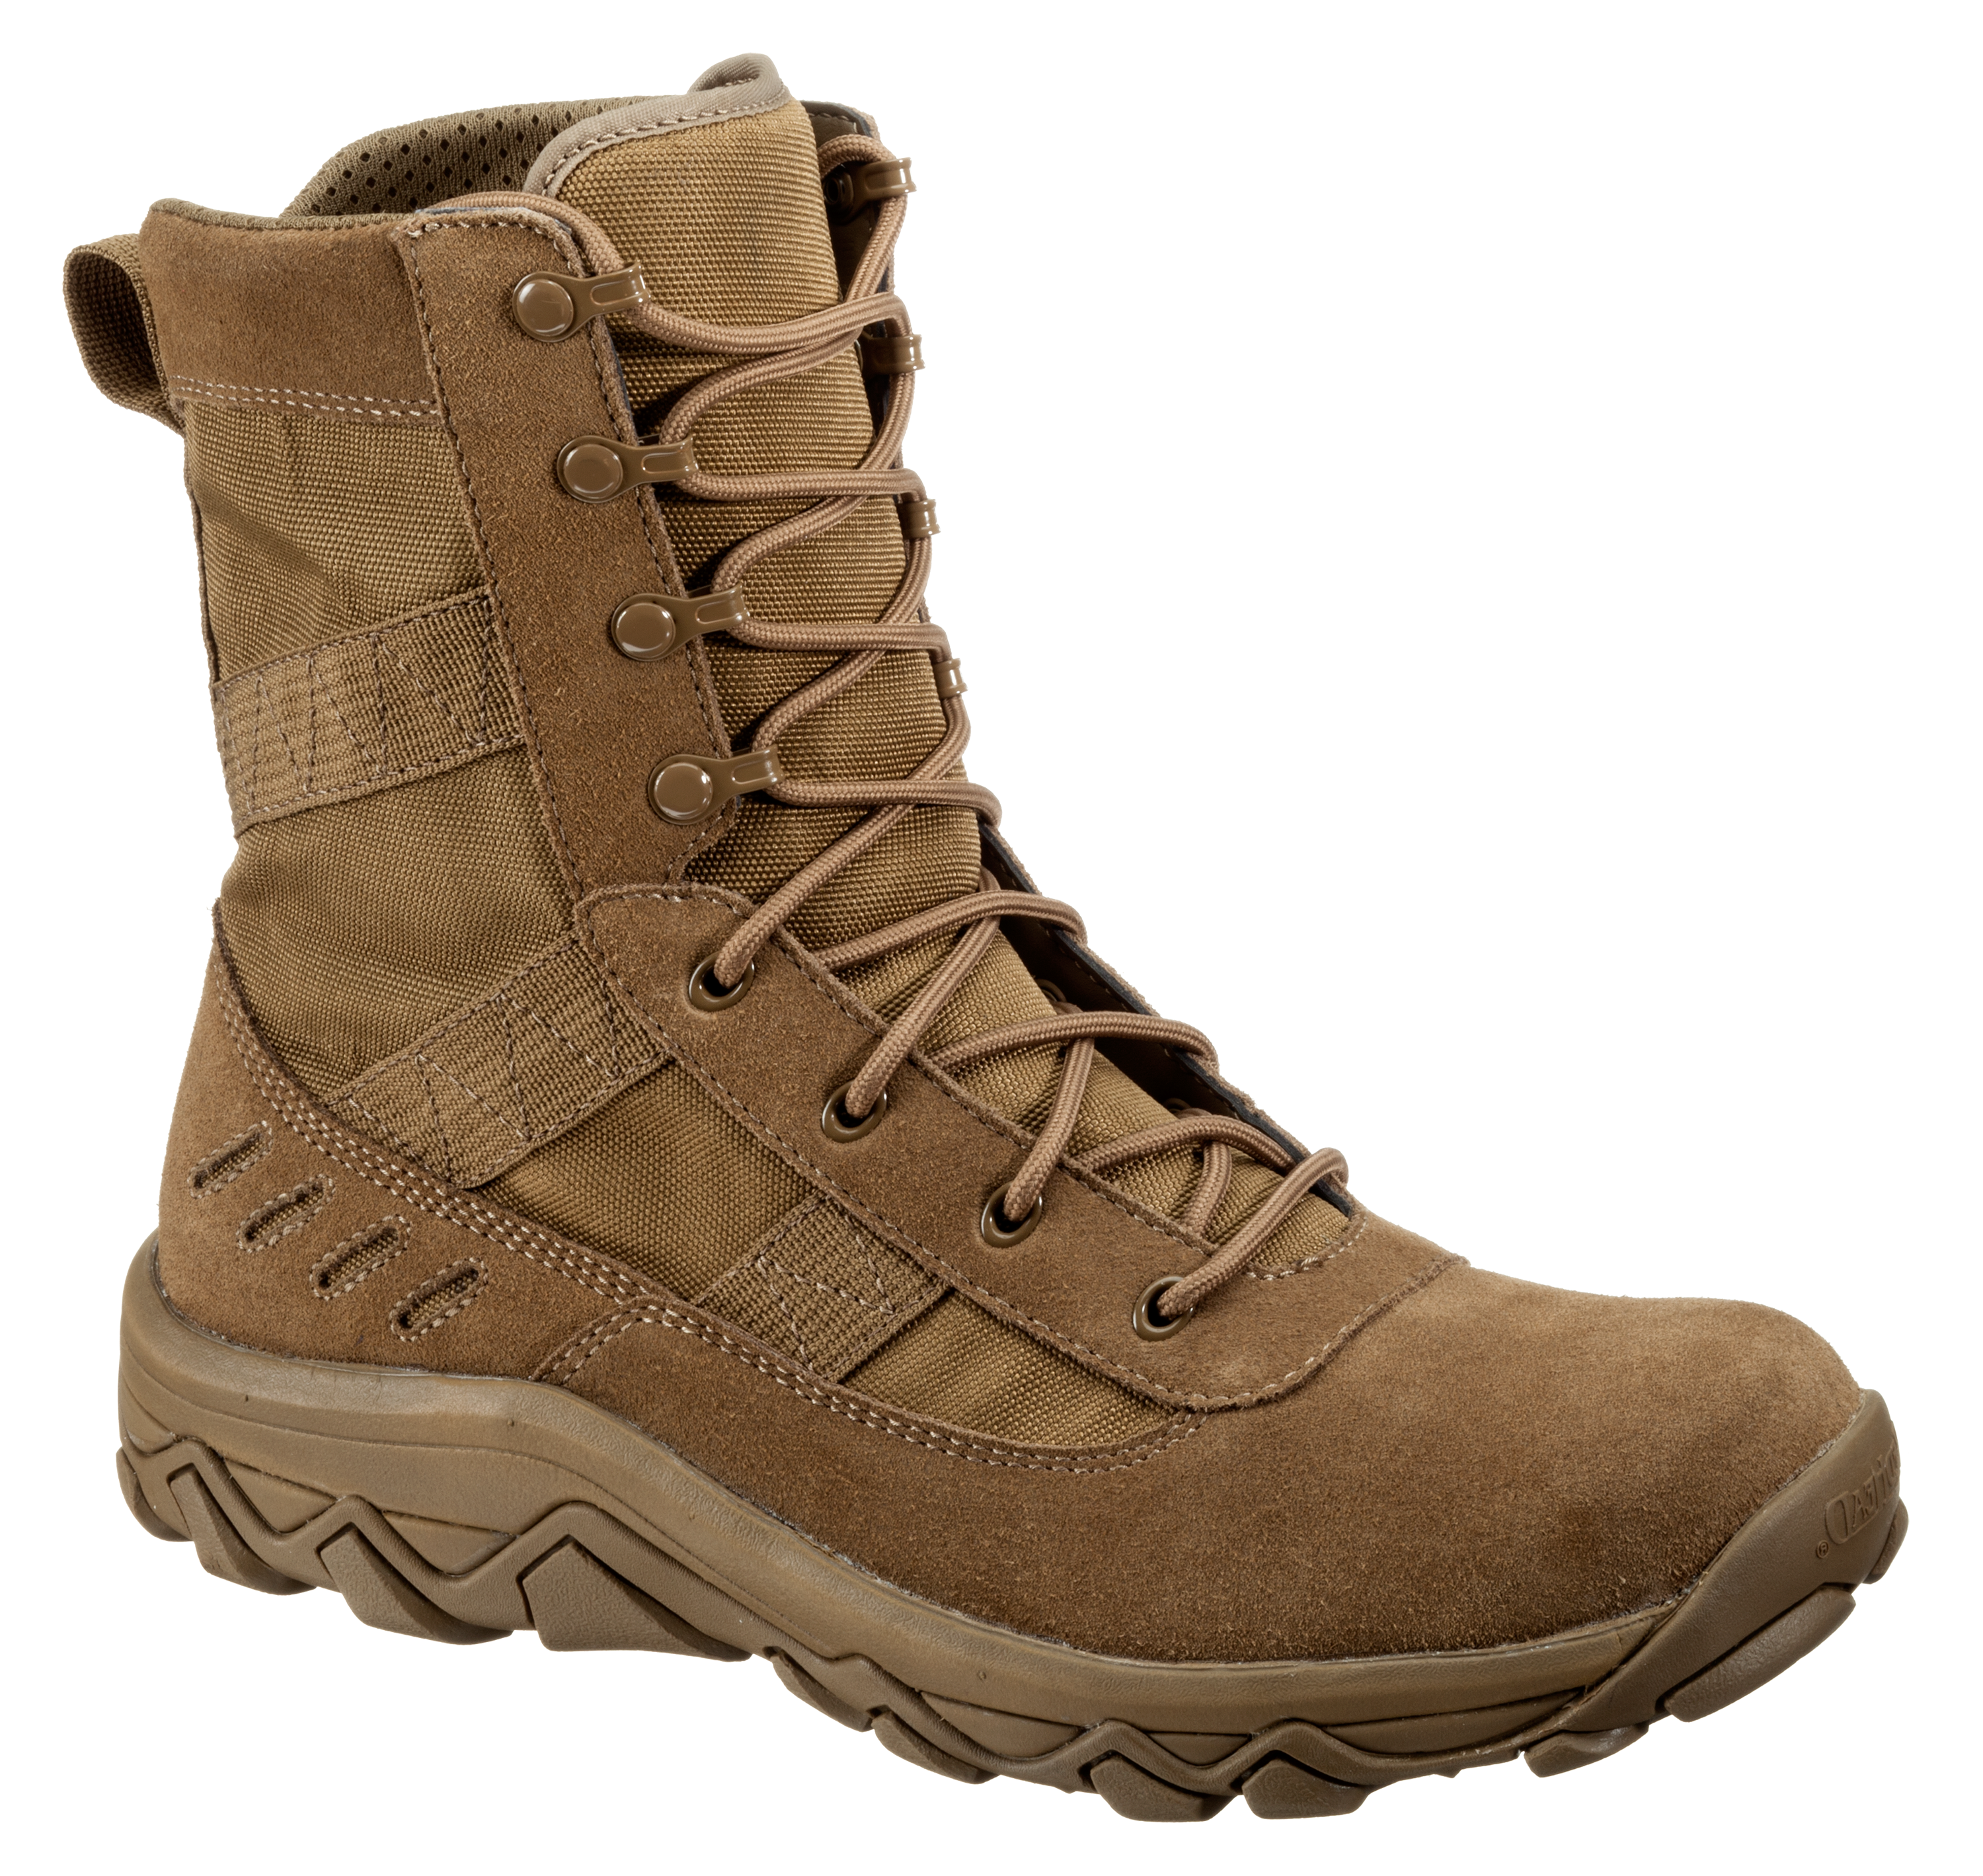 2021 Under Armour Men's Micro G Valsetz Leather Tactical Boots 3024009-200